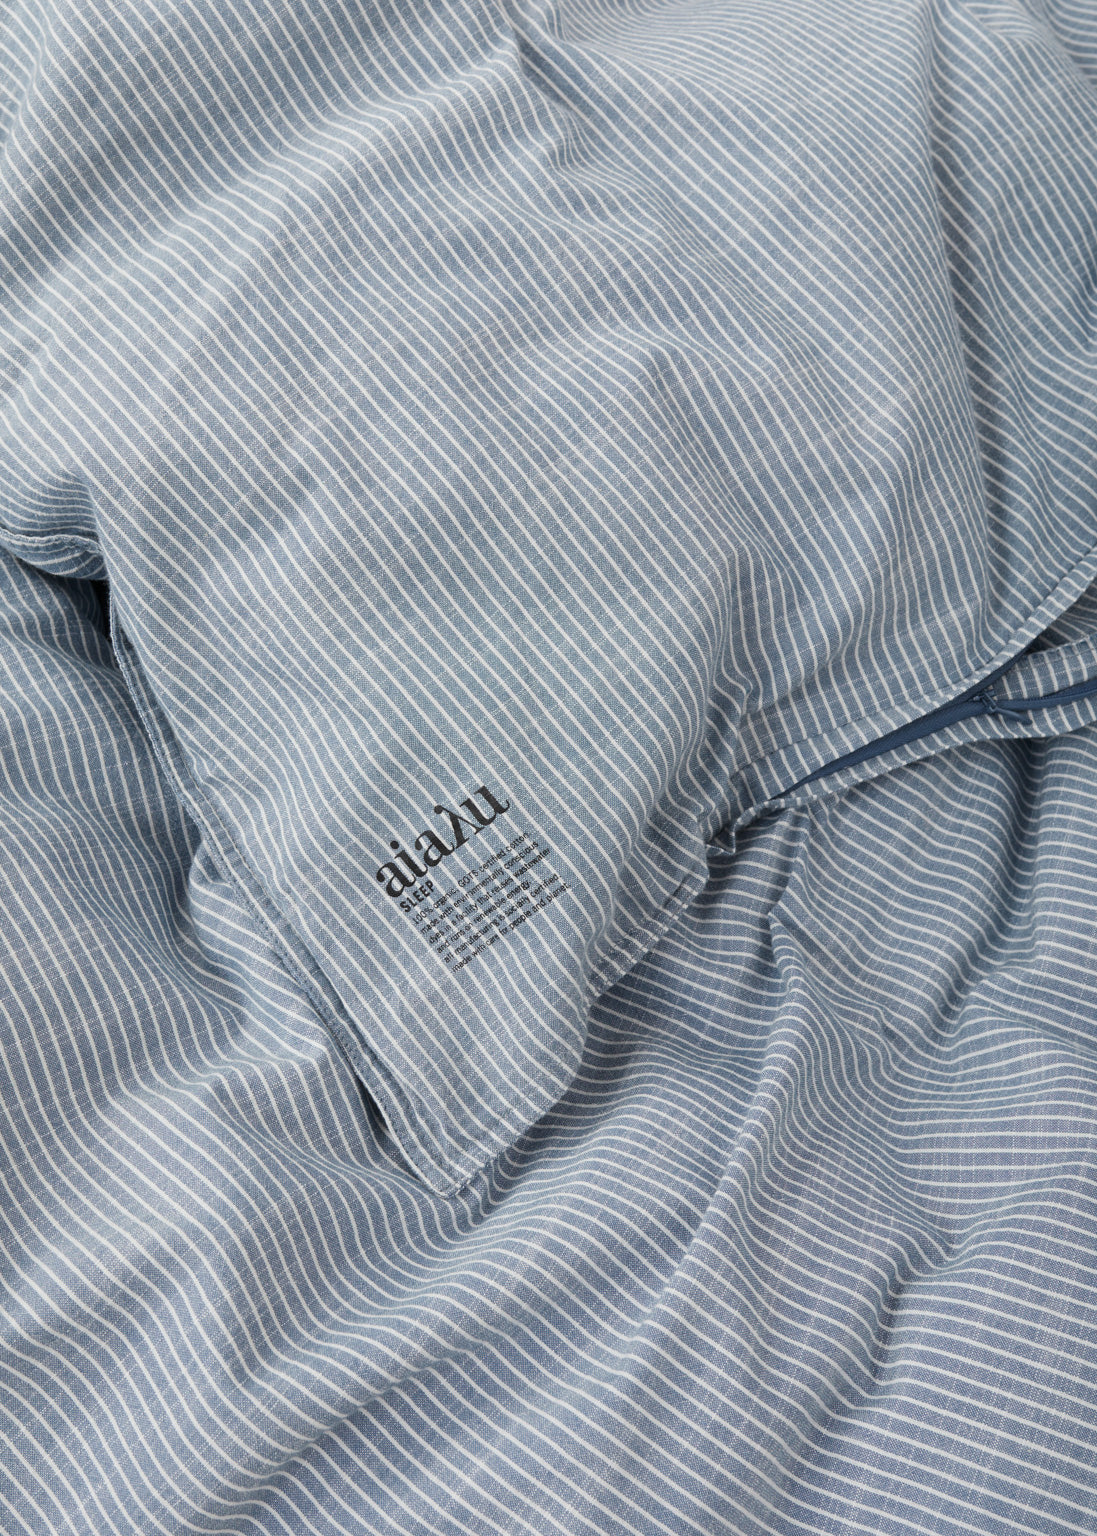 Duvet set 200x220 & pillow cases - striped indigo | Indigo